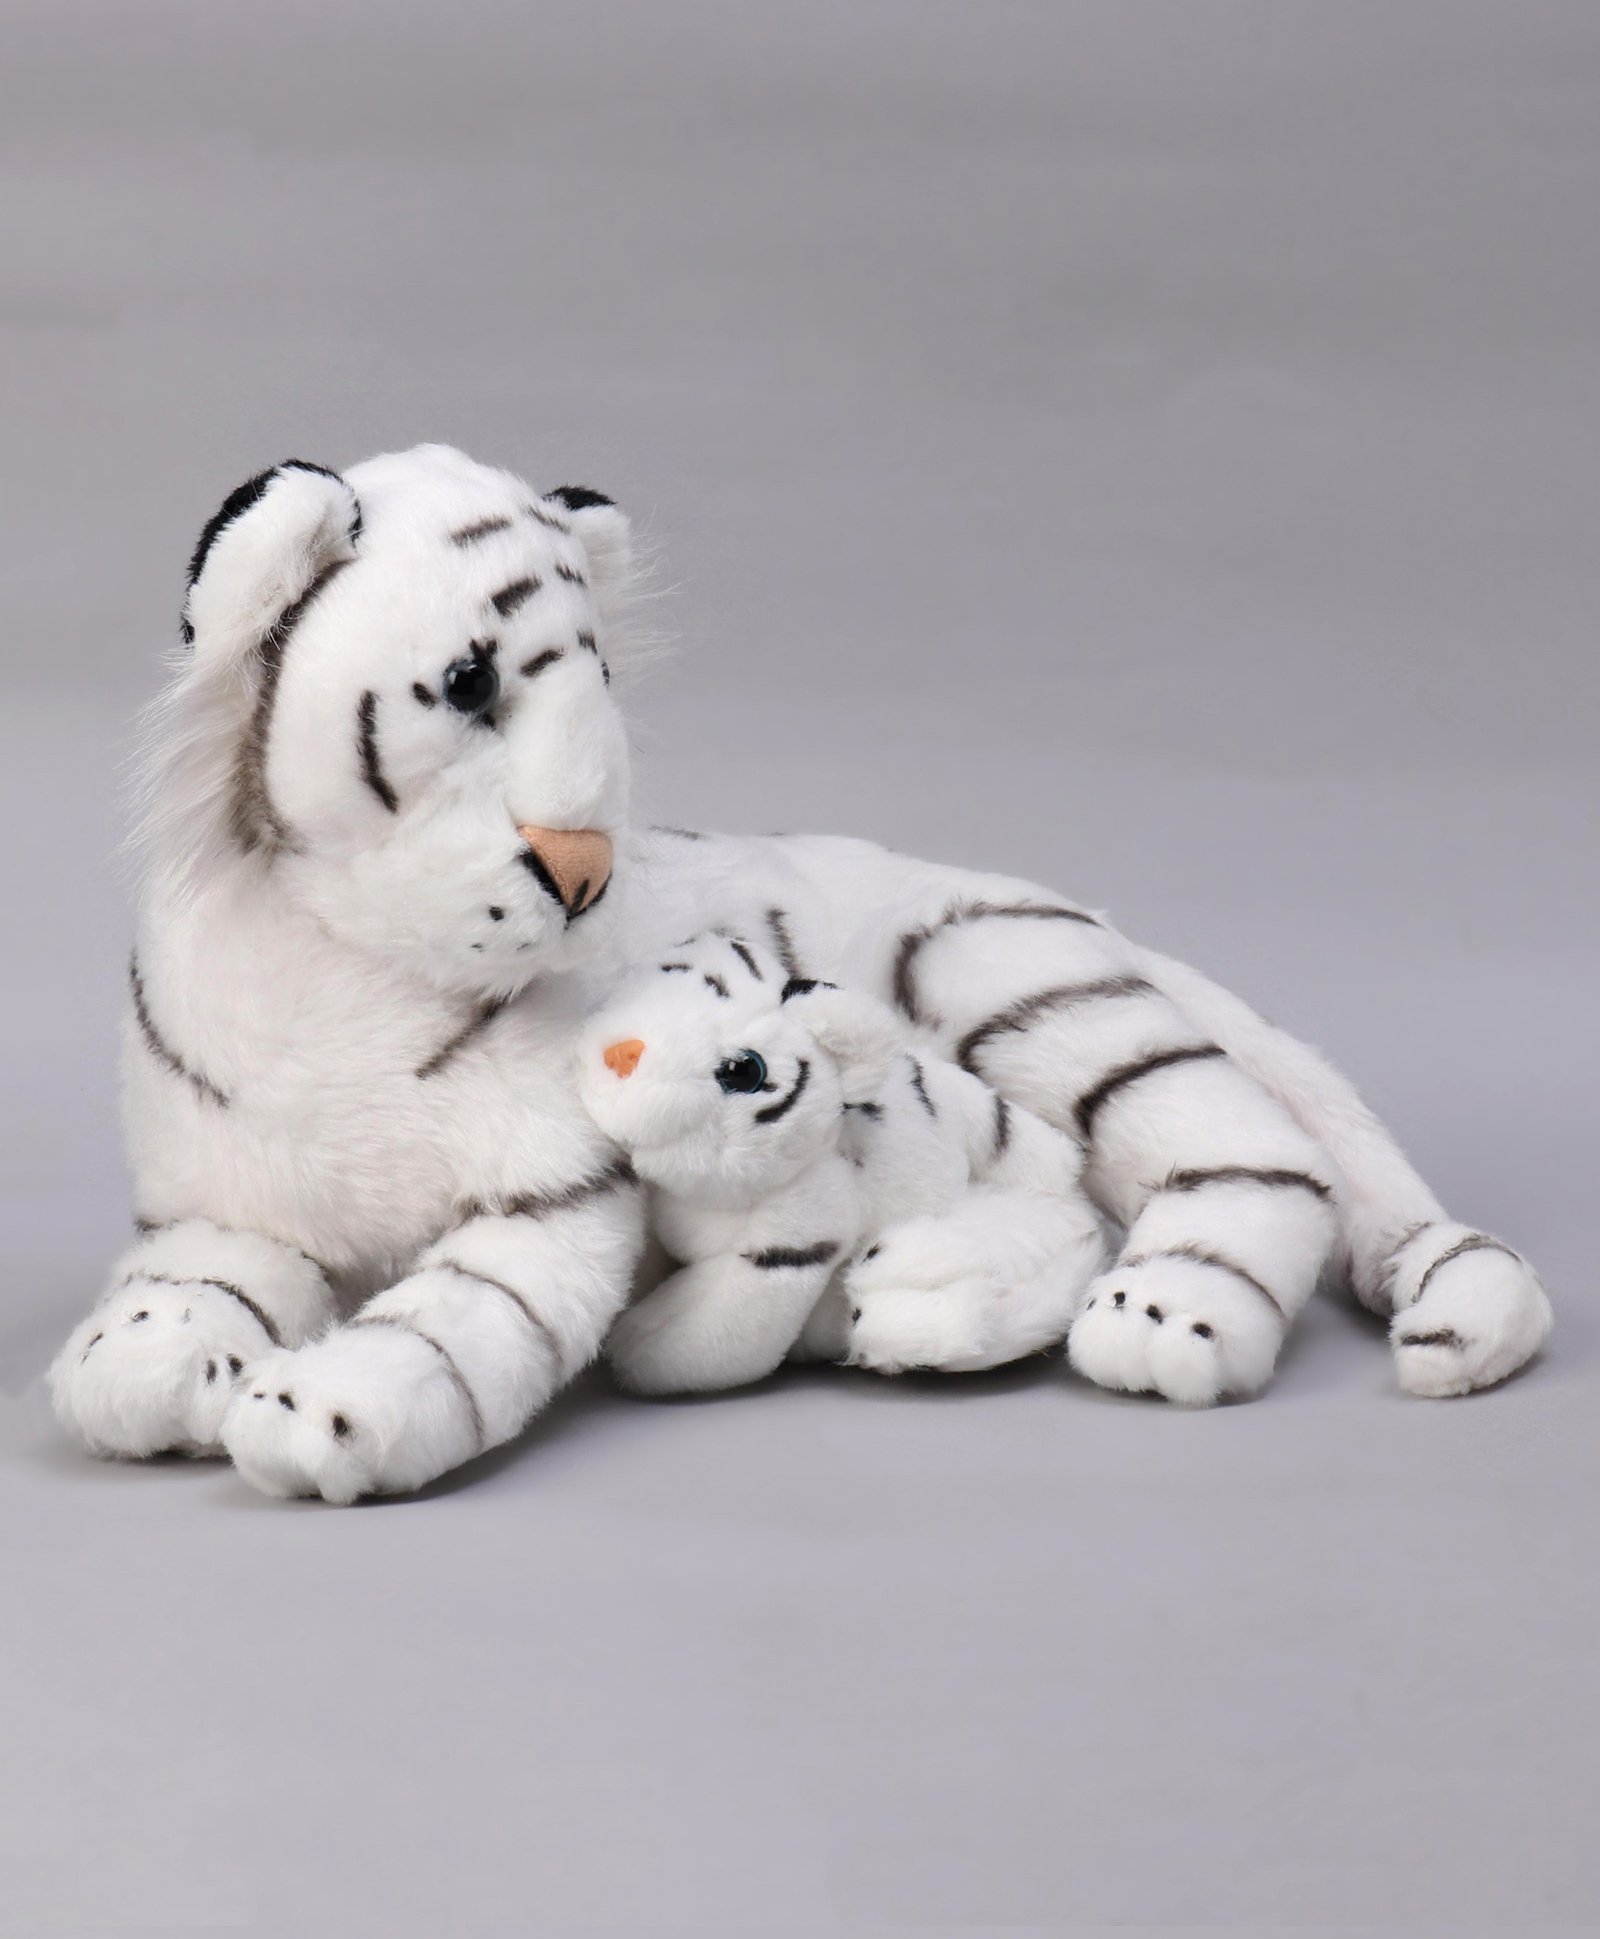 baby tiger soft toy